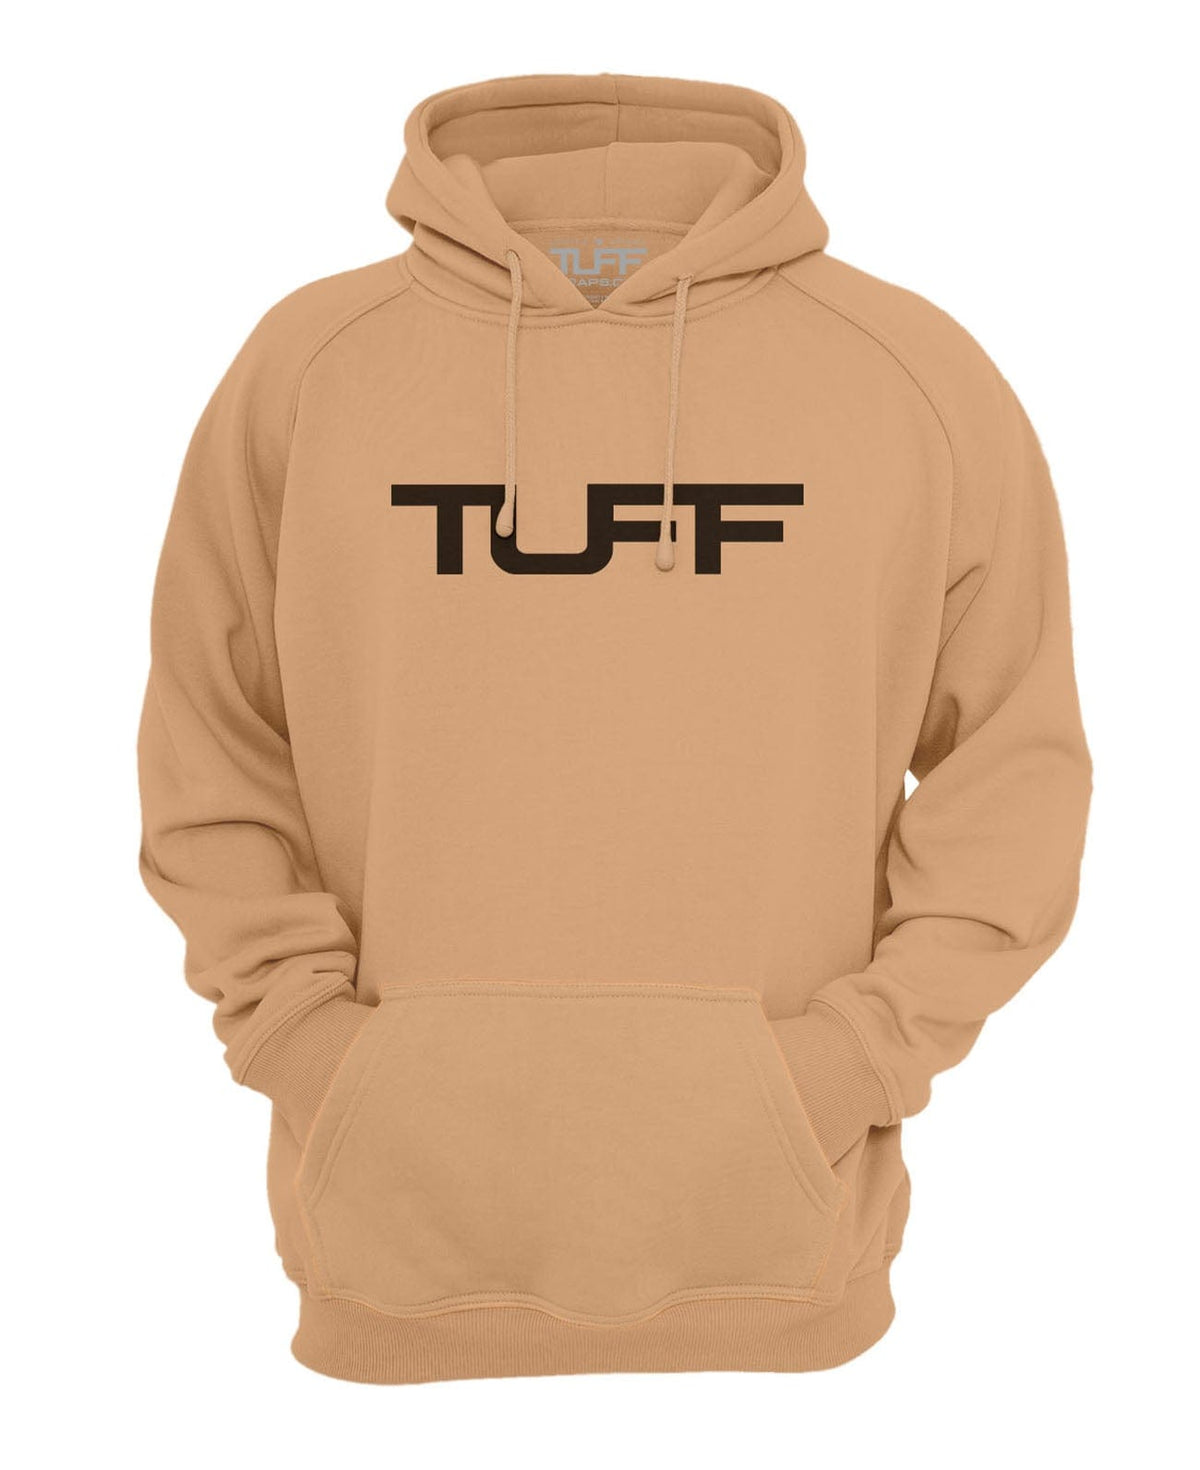 TUFF Sandstone Hooded Sweatshirt S / Sandstone TuffWraps.com